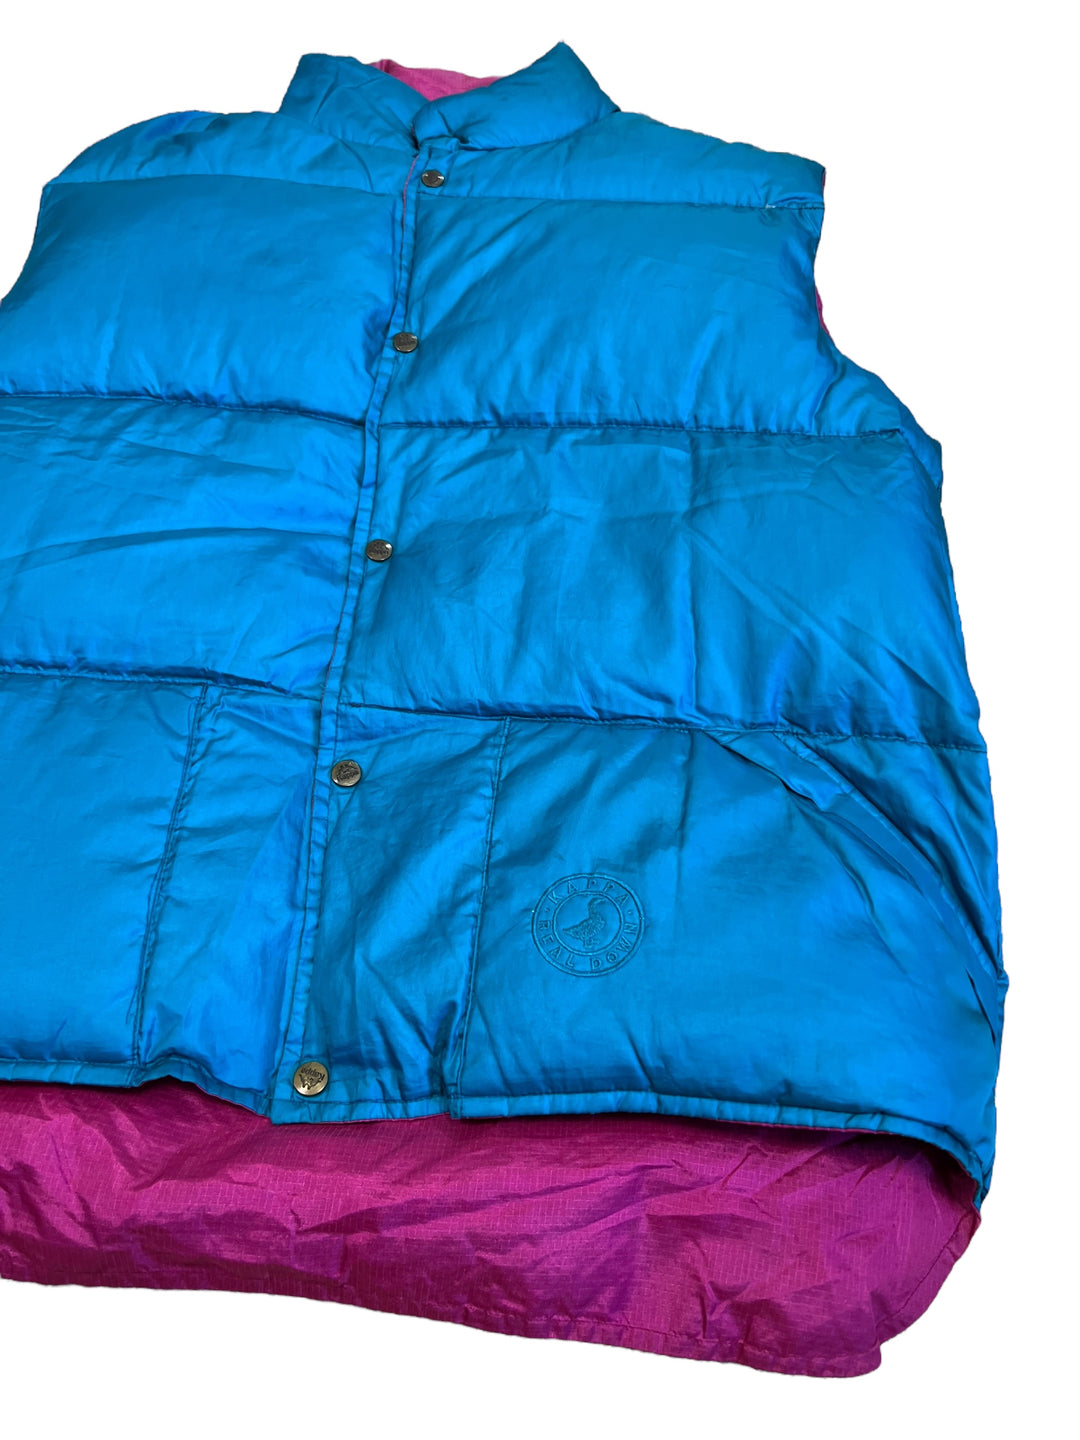 Kappa vintage reversible ski vest jacket Men’s Extra Large